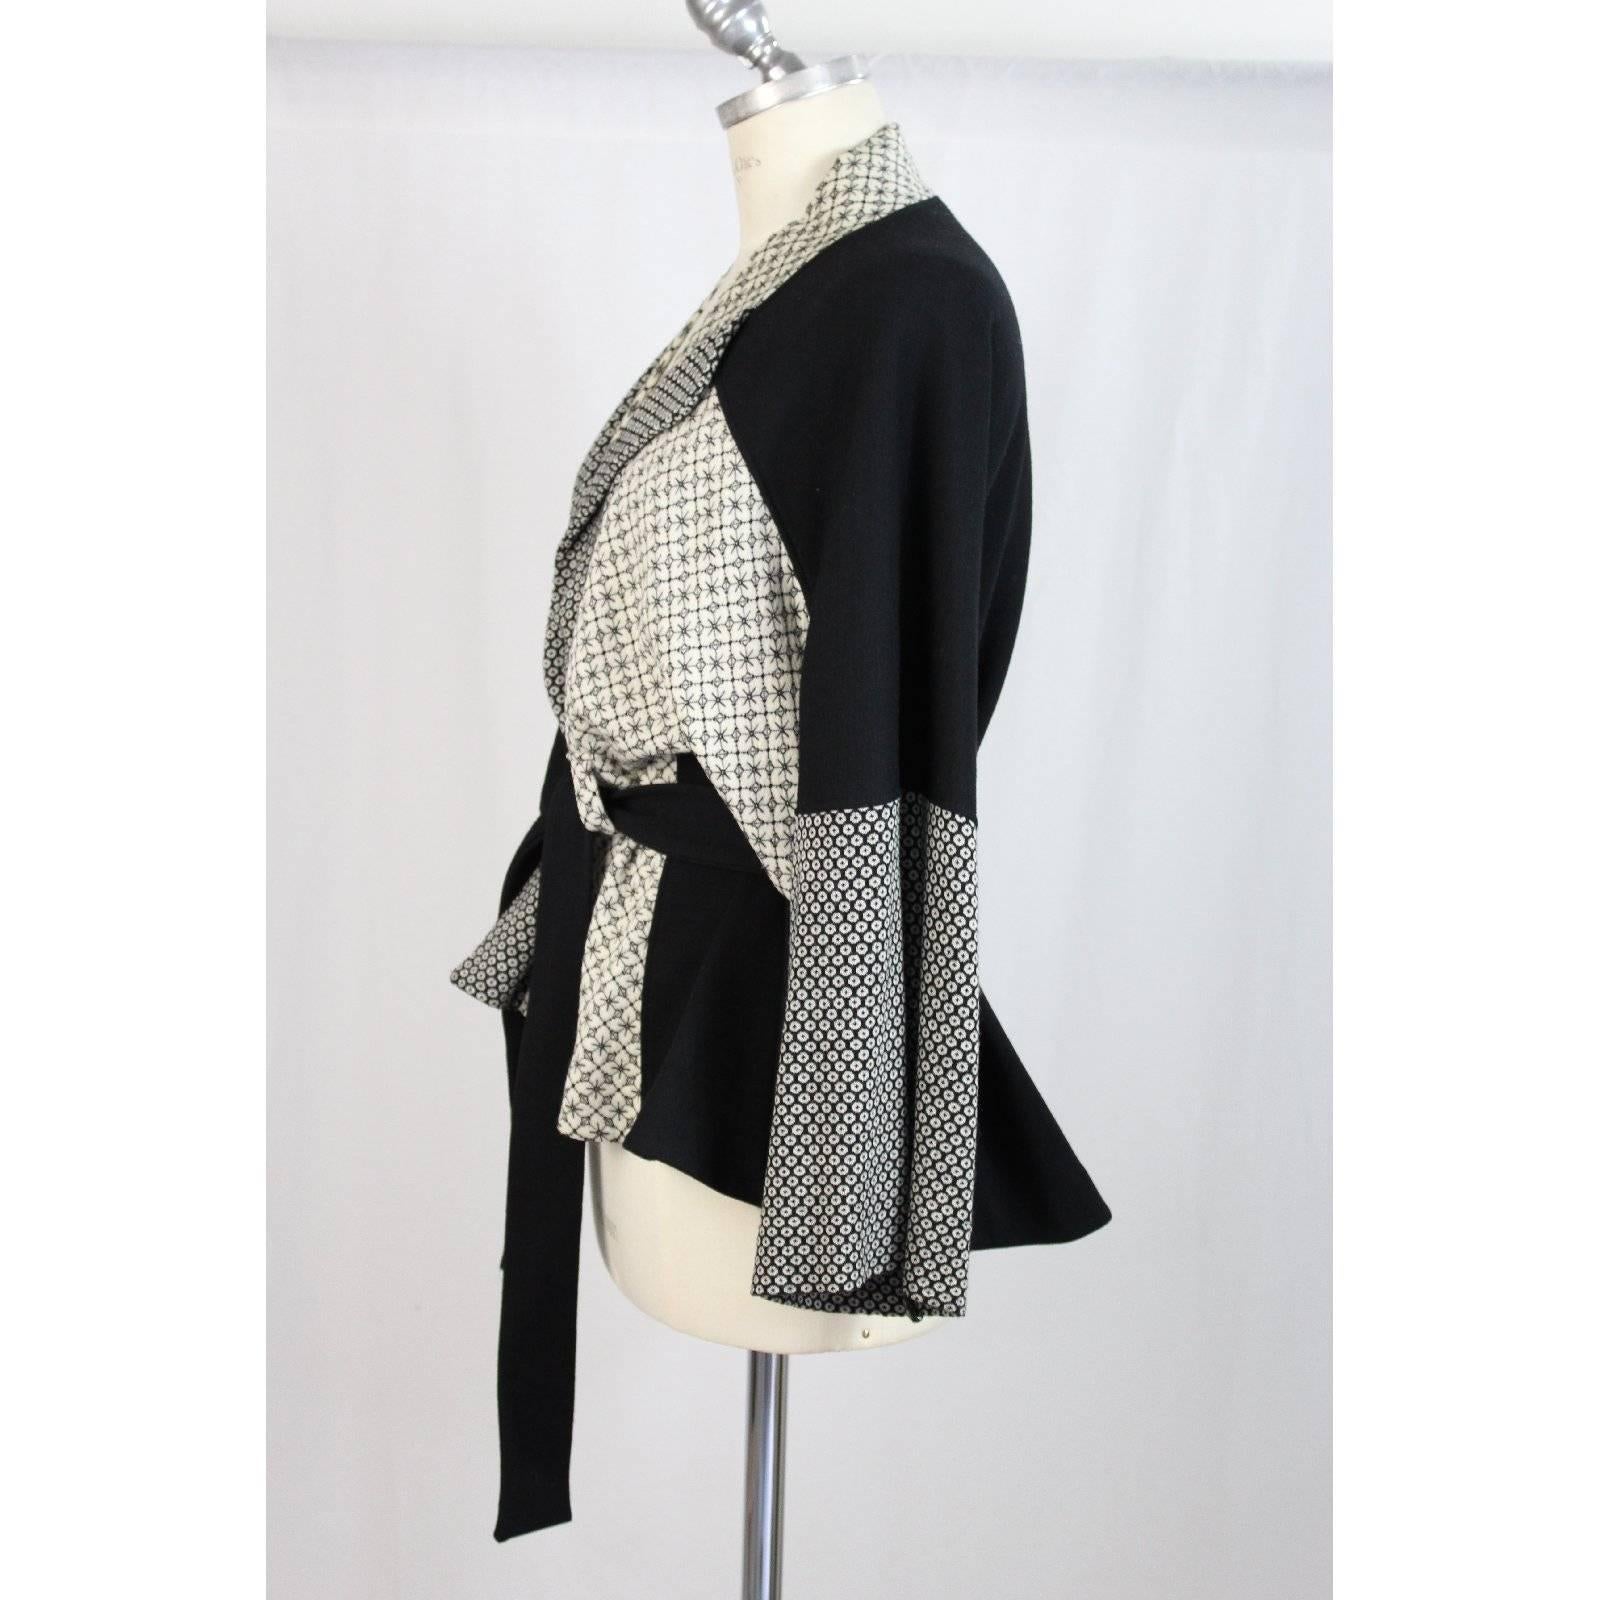 Kenzo sweater black and white wool type kimono, waist belt, size M excellent condition.

Size: M it; 10 us; 12 uk

Measurements:
Shoulder: 44 cm
Ascelle: 56 cm
Sleeve: 52 cm
Length: 57 cm

Color: black and white
Composition: wool
Condition: